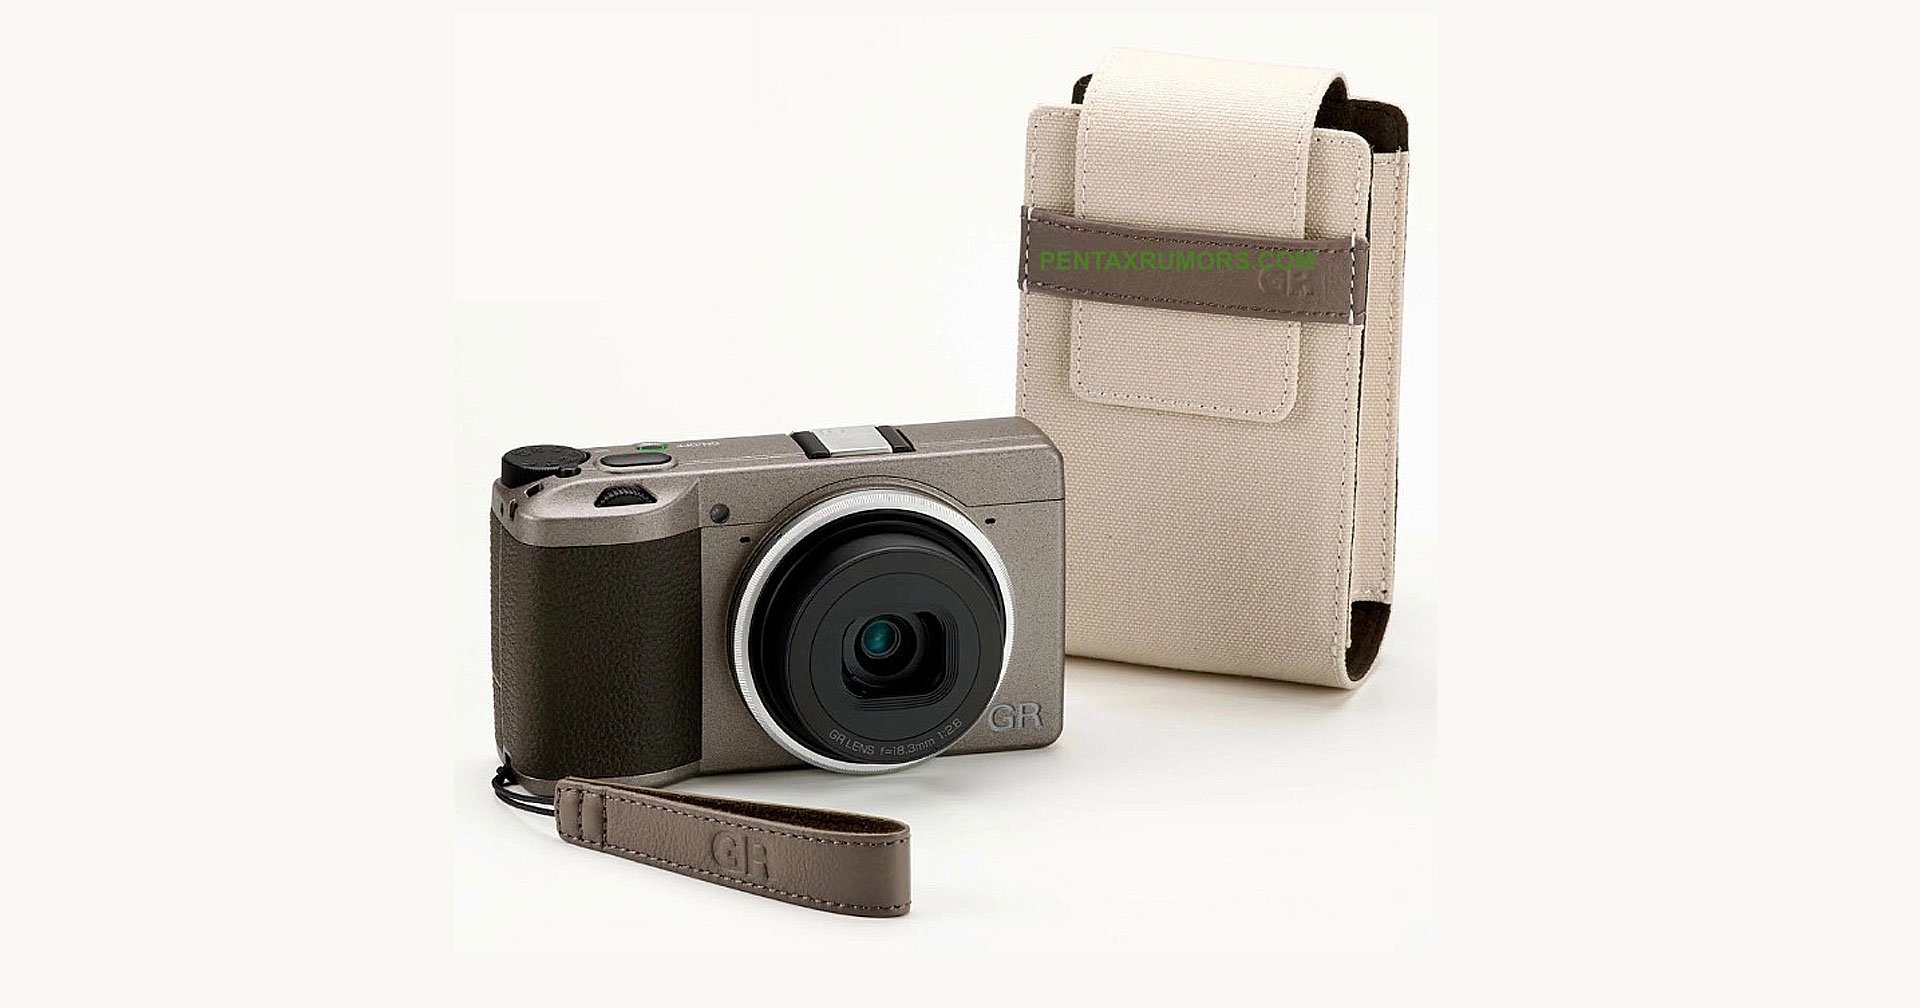 Ricoh เตรียมเปิดตัวกล้อง GR III ‘Diary’ Limited Edition ที่มีเพียง 2000 ตัวทั่วโลก